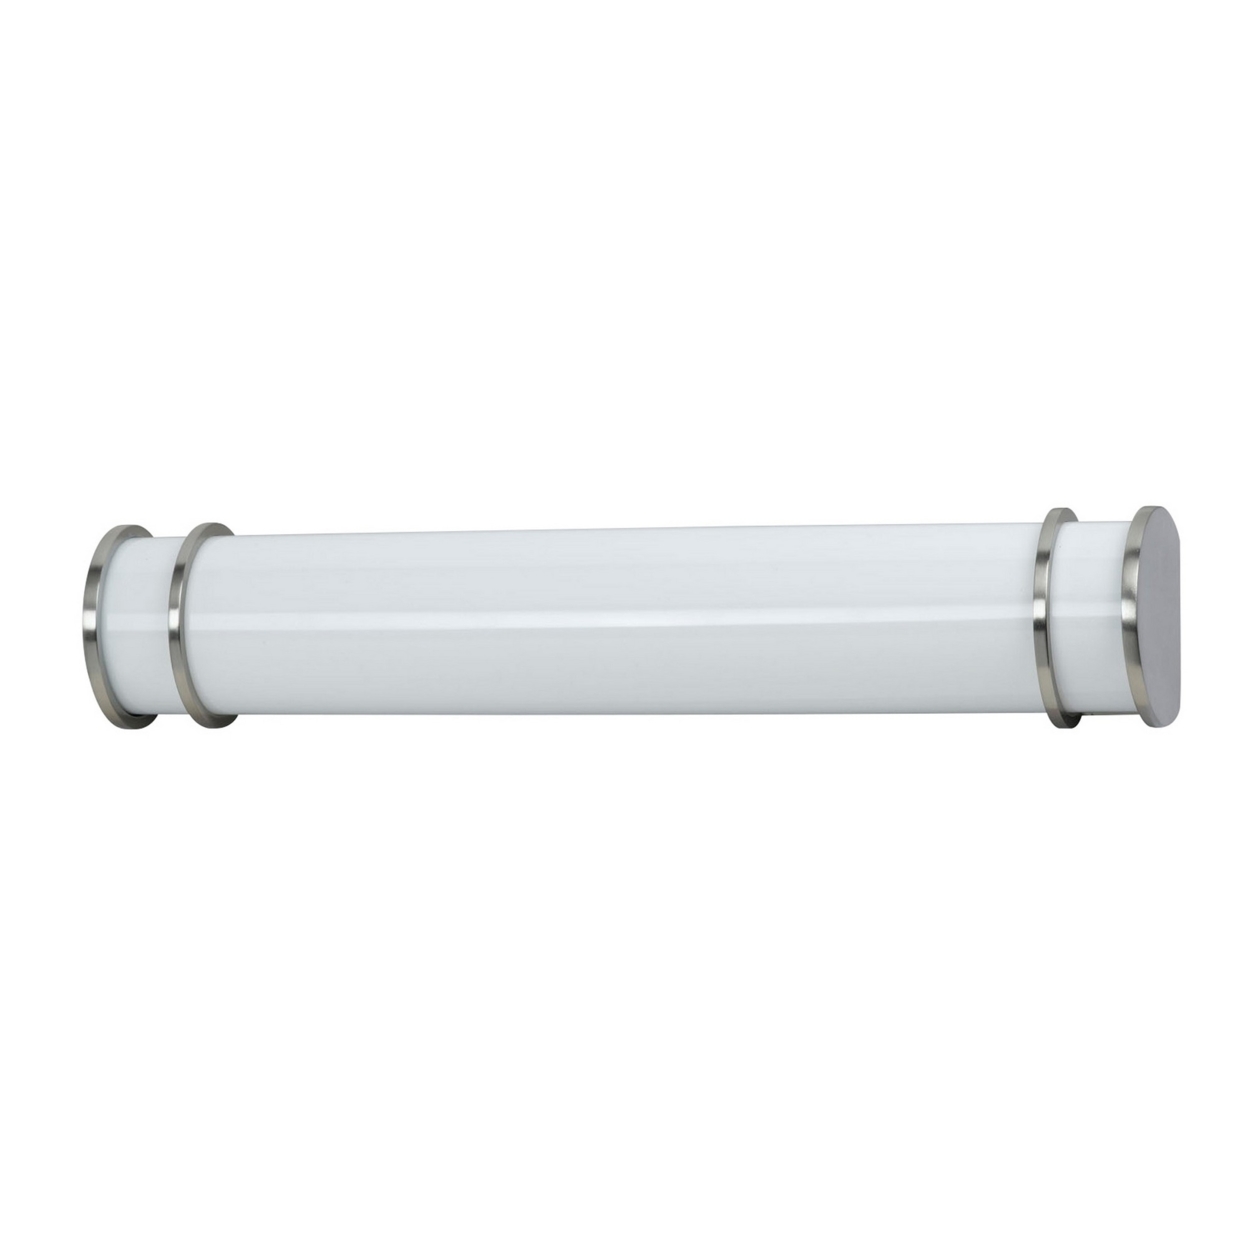 Pipe Design Metal Vanity Light With Hardwired Switch,Set Of 4, Medium,White- Saltoro Sherpi